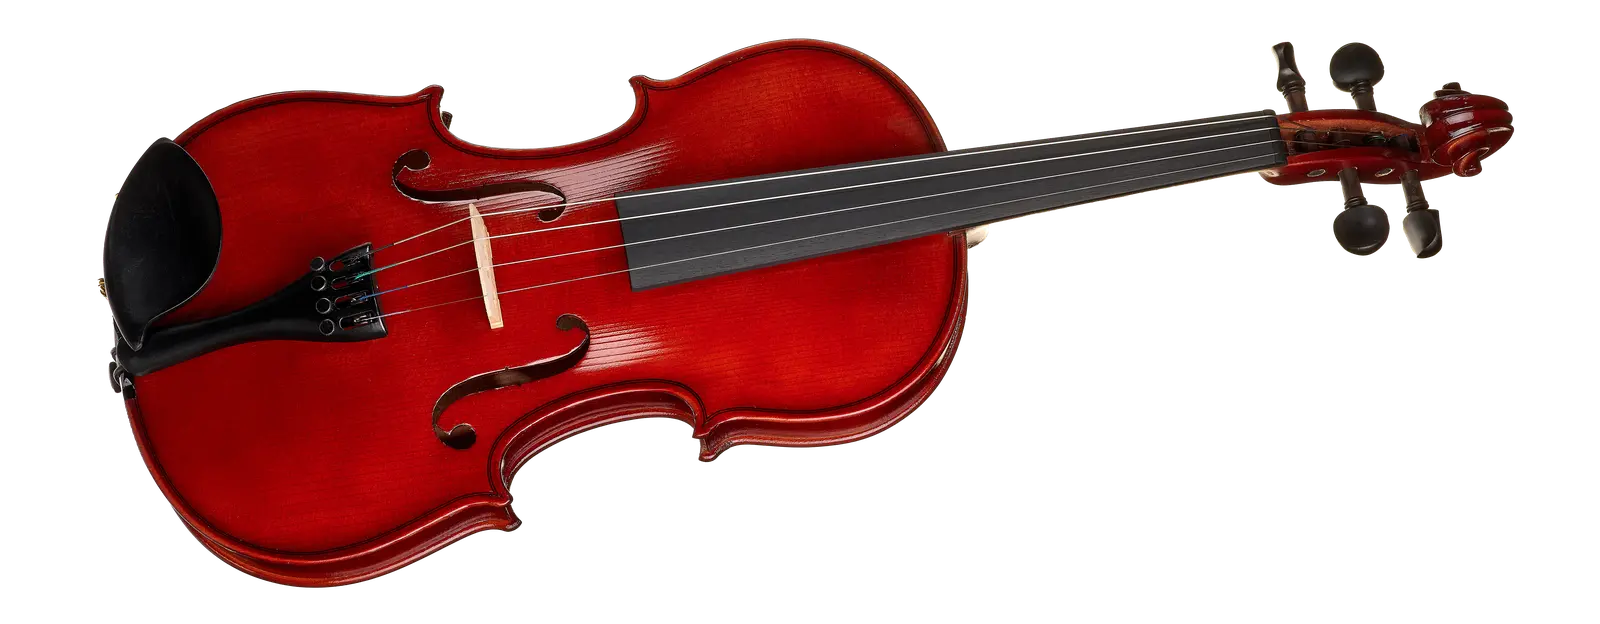 violin thomann opiniones - Son buenos los violines Thomann